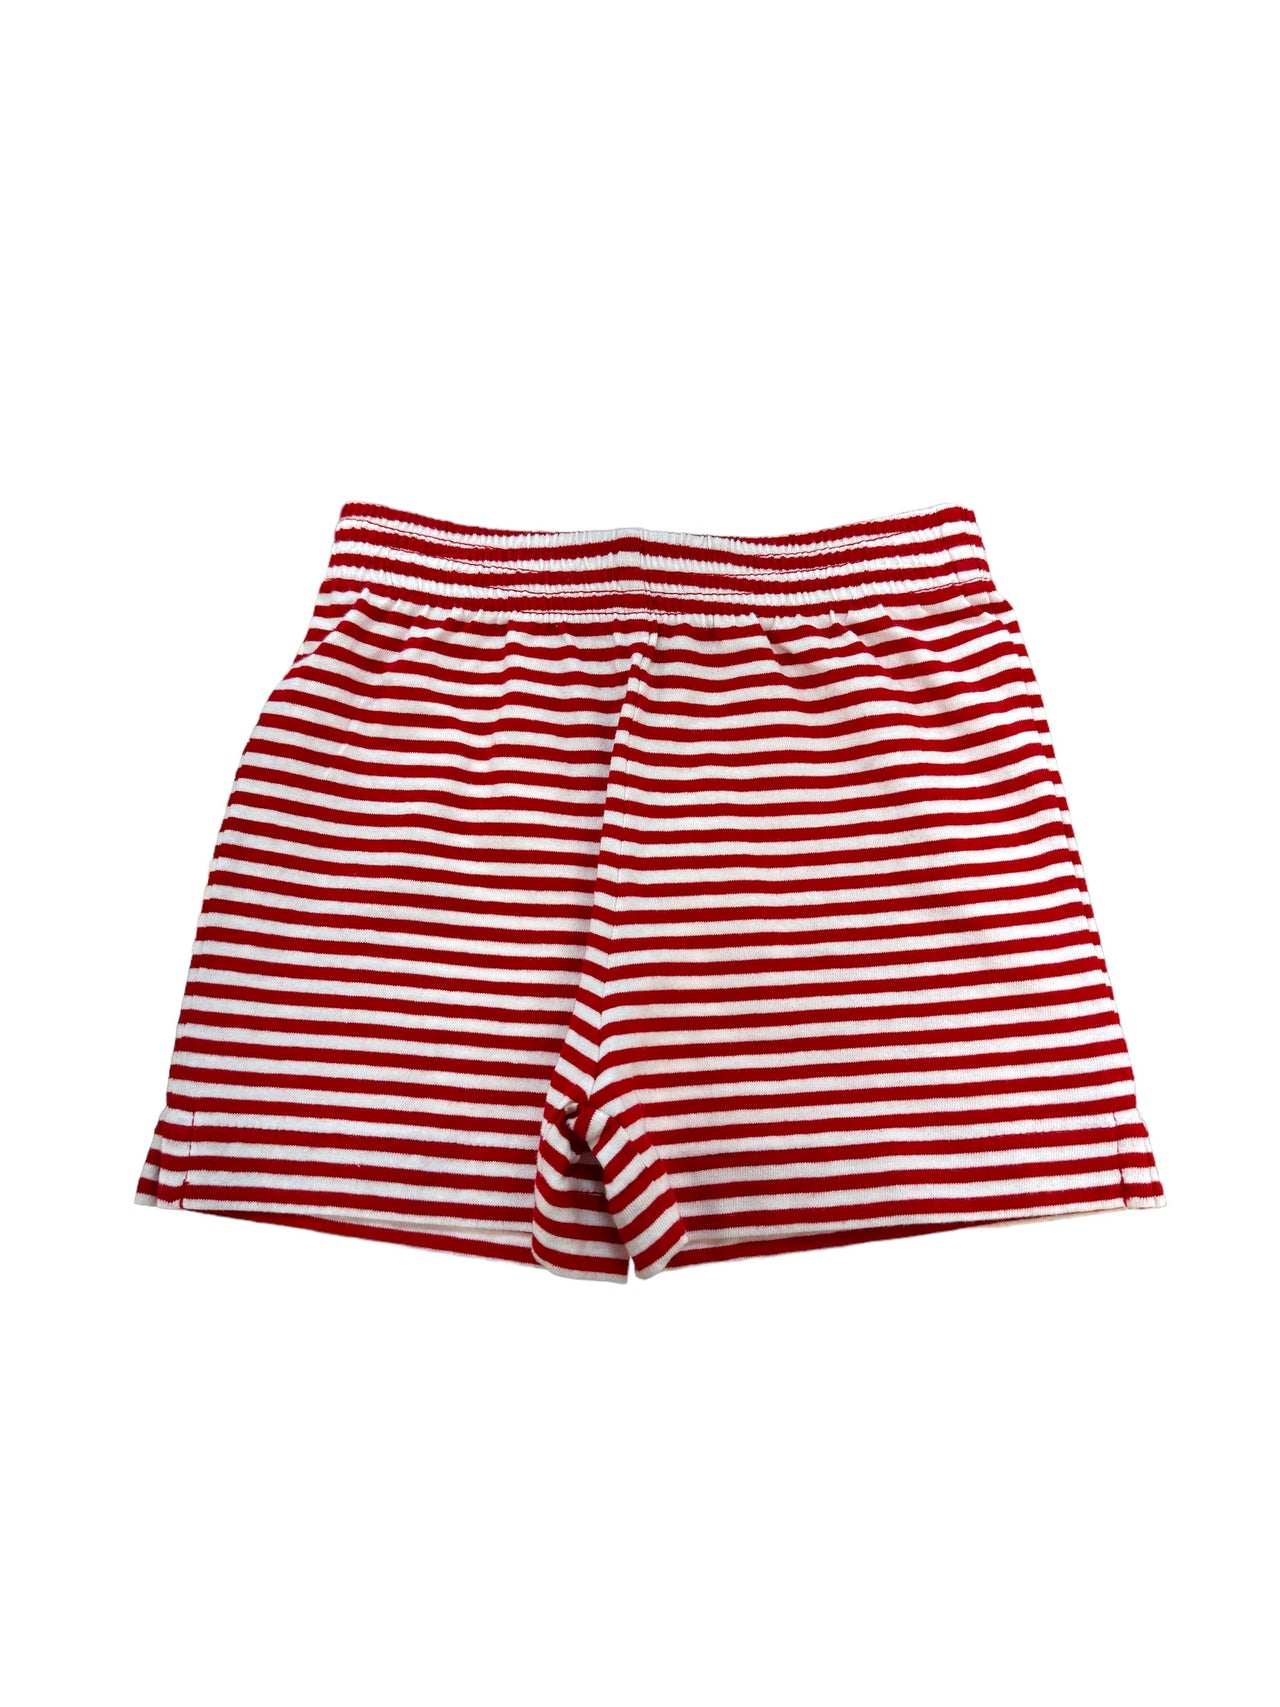 Luigi N Jersey Stripe Boys Shorts W/Slit Deep Red/White  SH097-224 5012